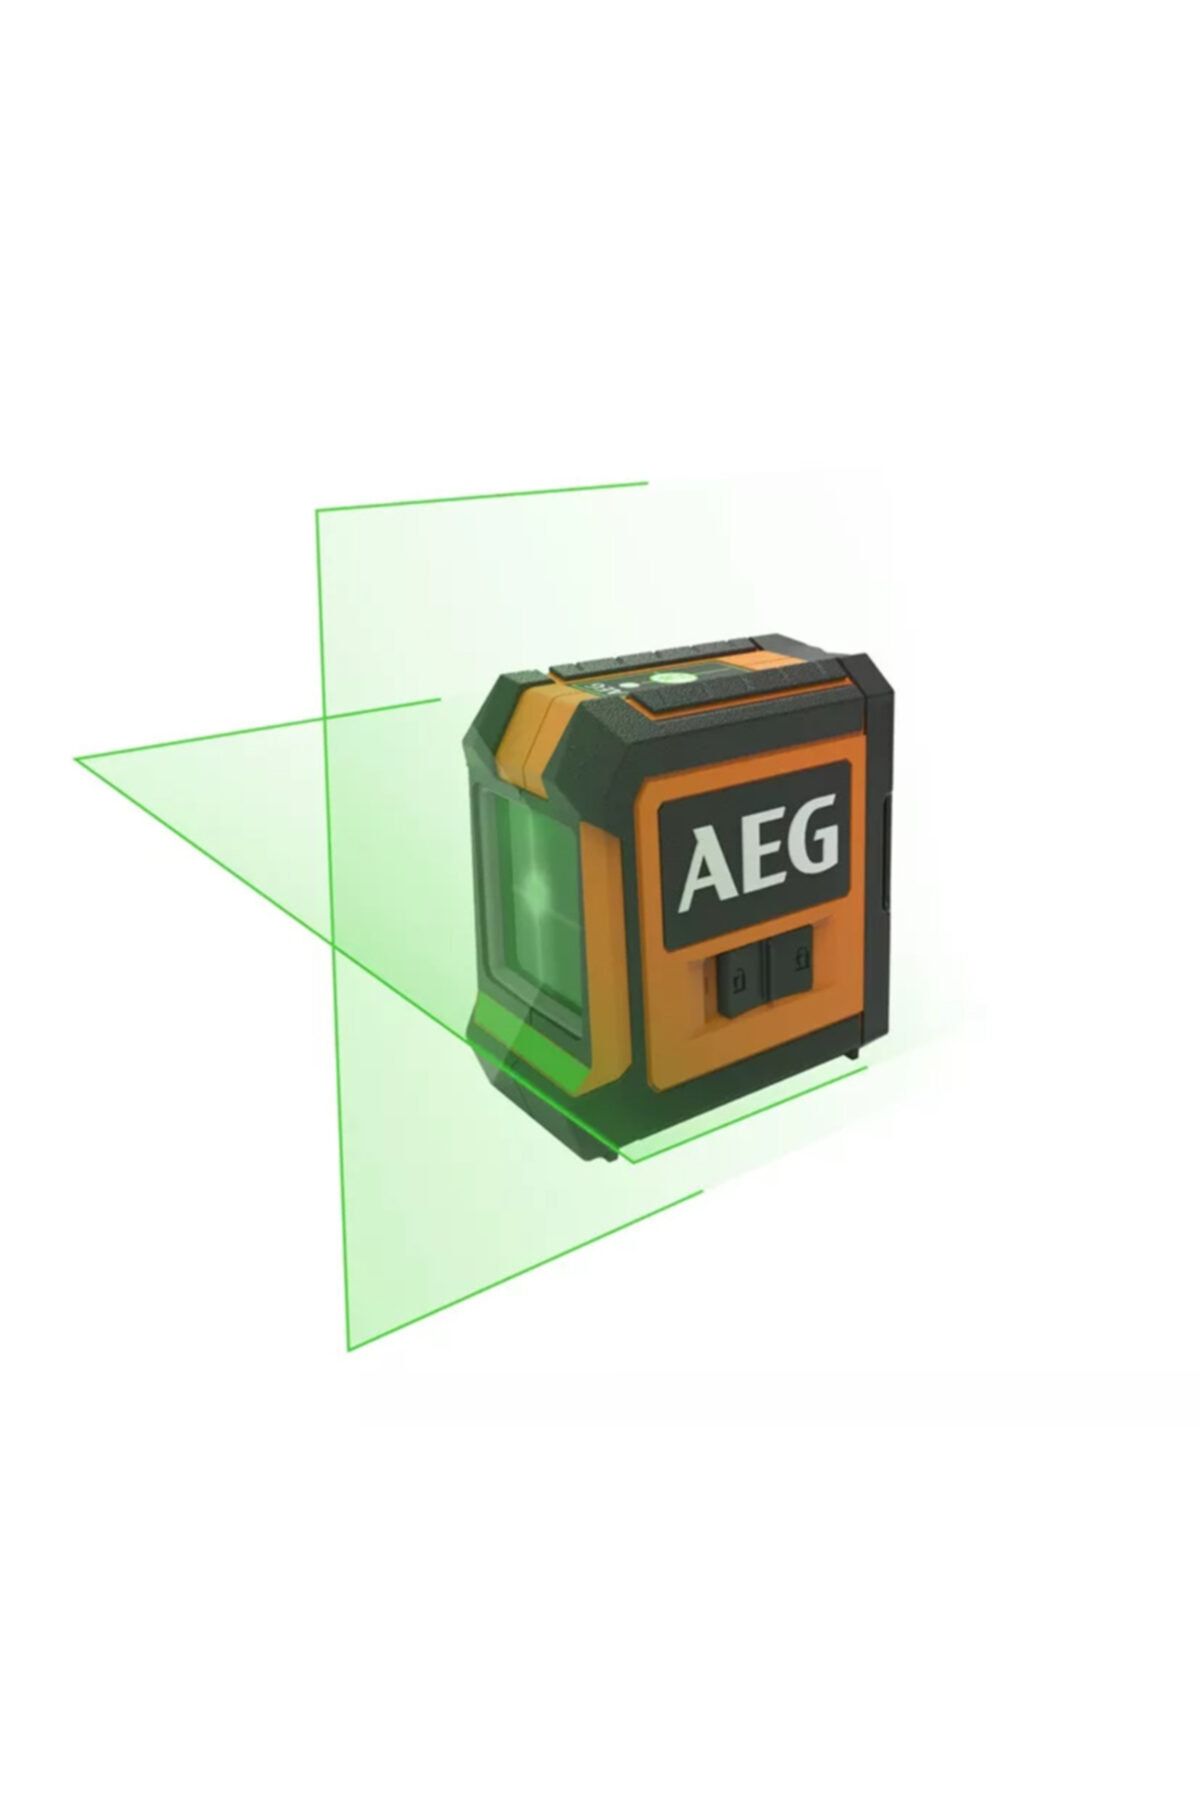 AEG Clg220-b Yeşil Çizgili Lazer Hizalama